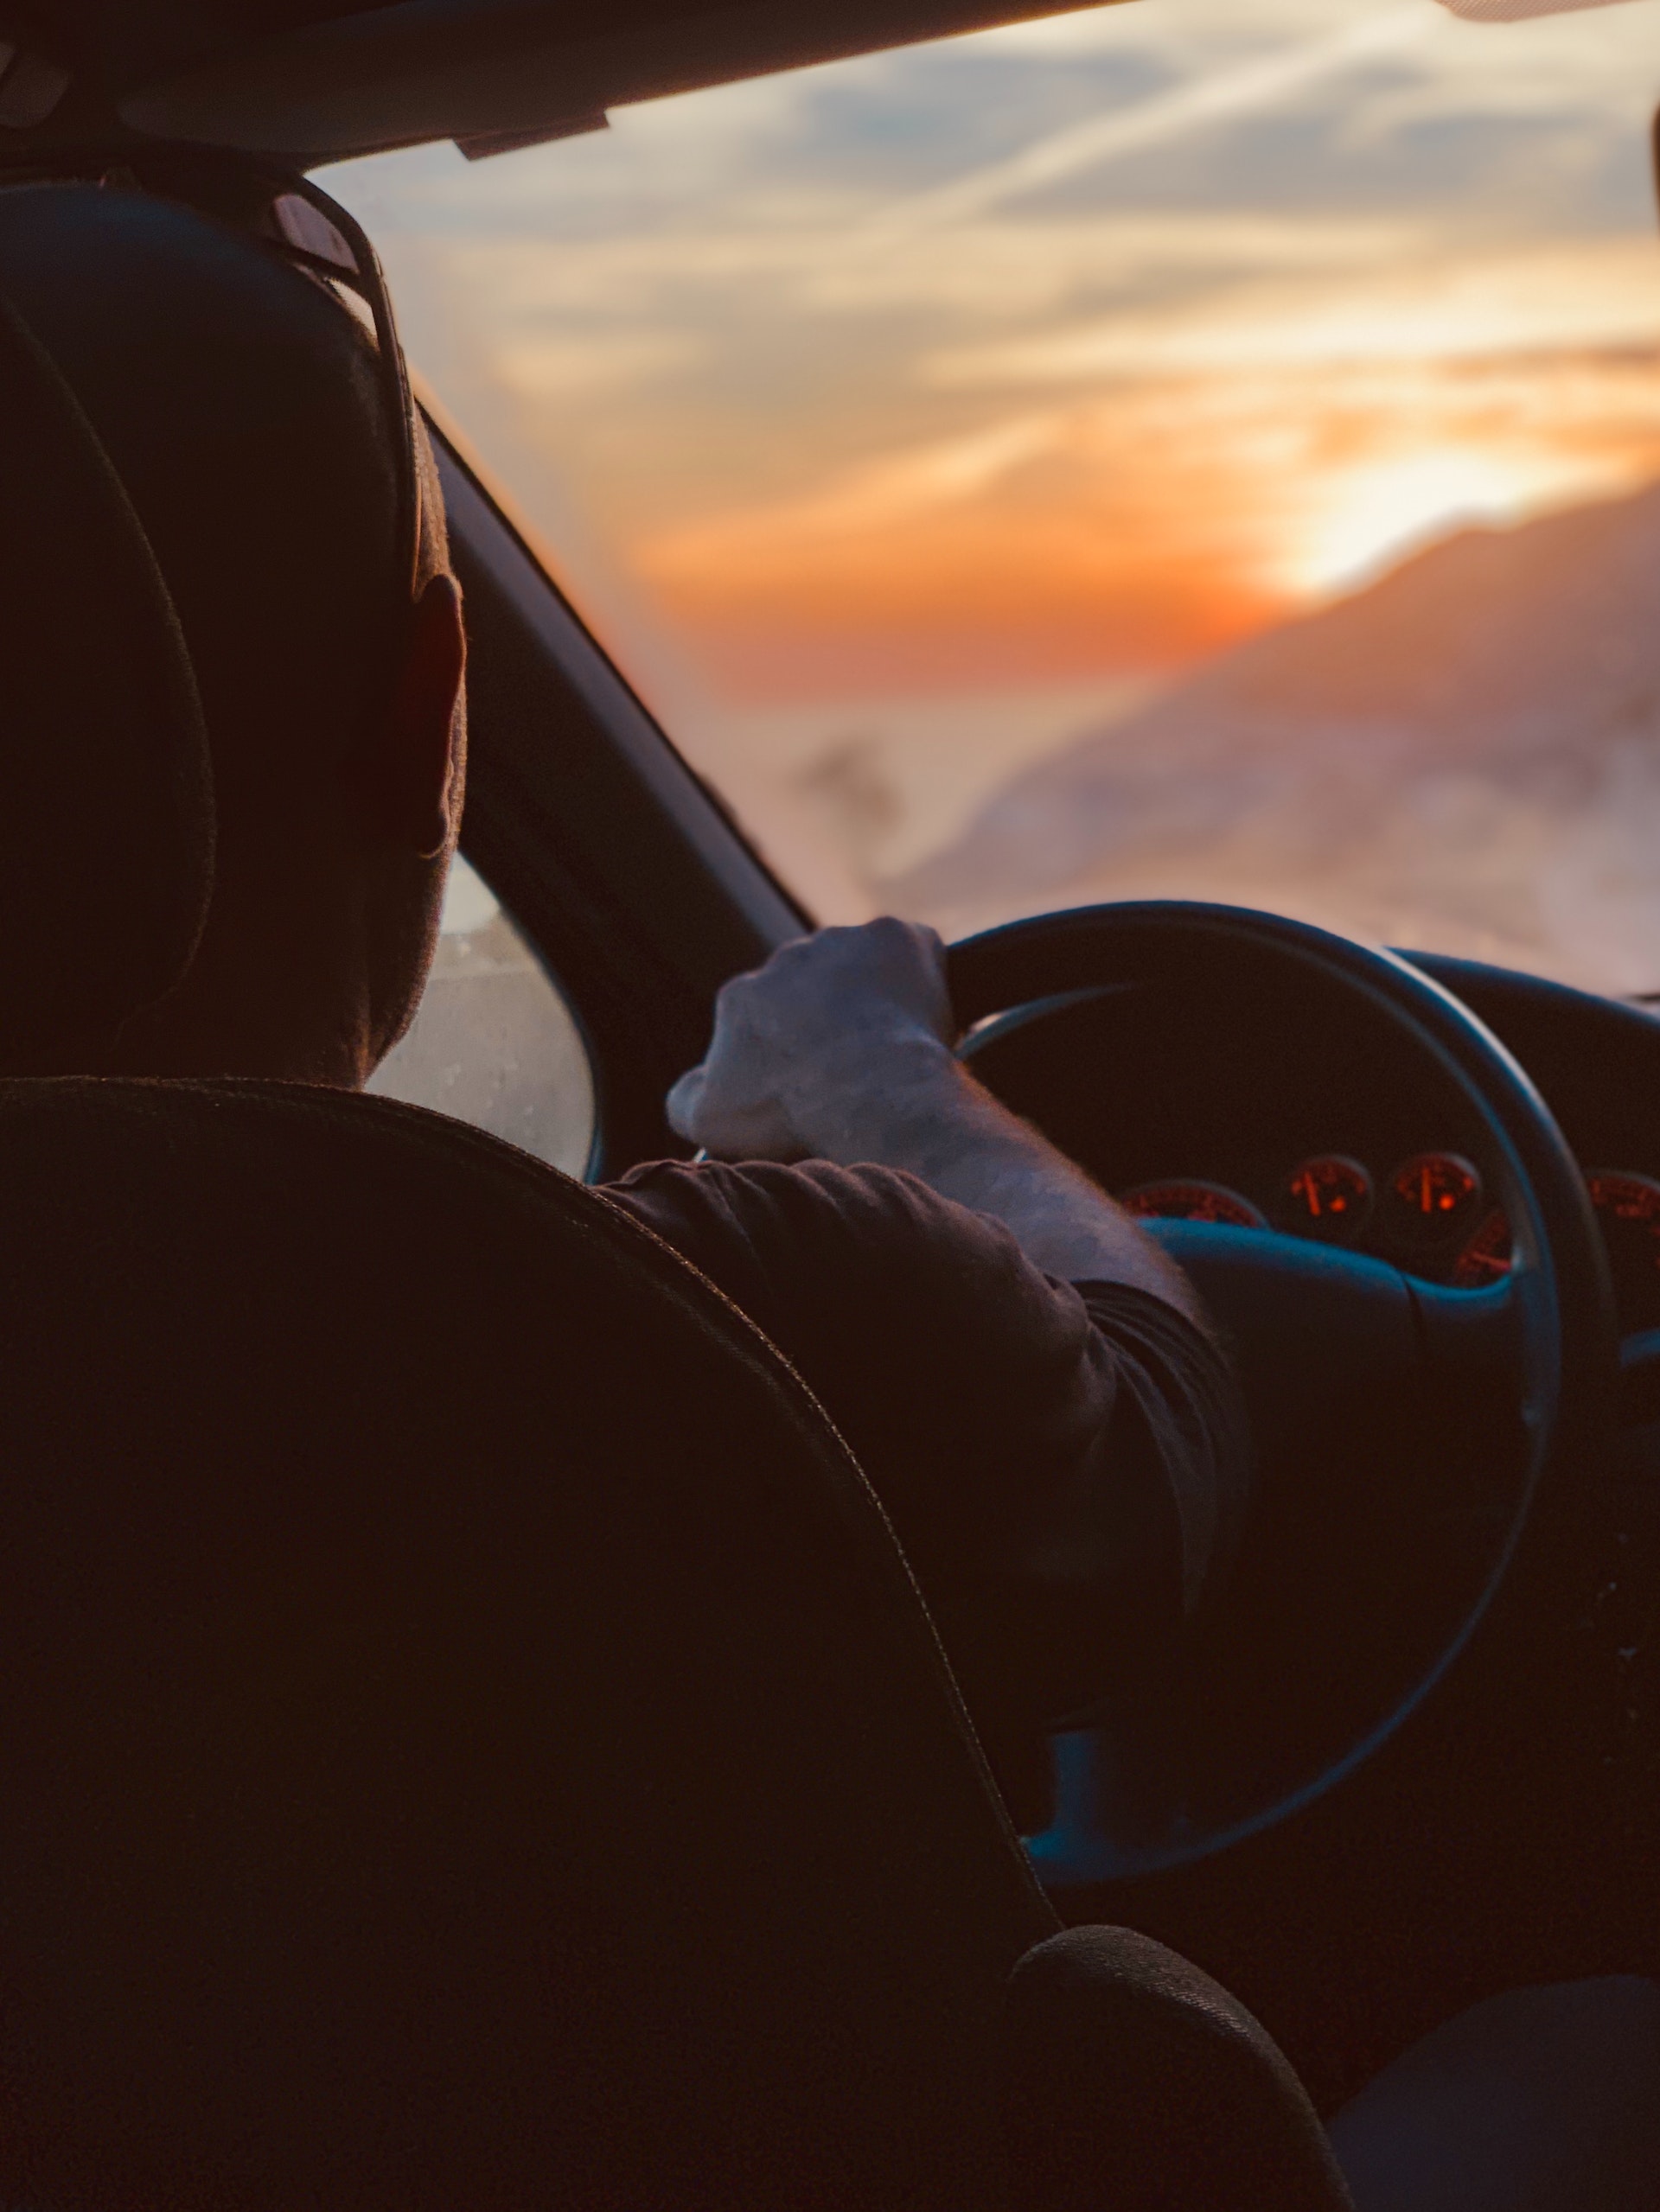 A man sitting behind the wheel | Source: Pexels